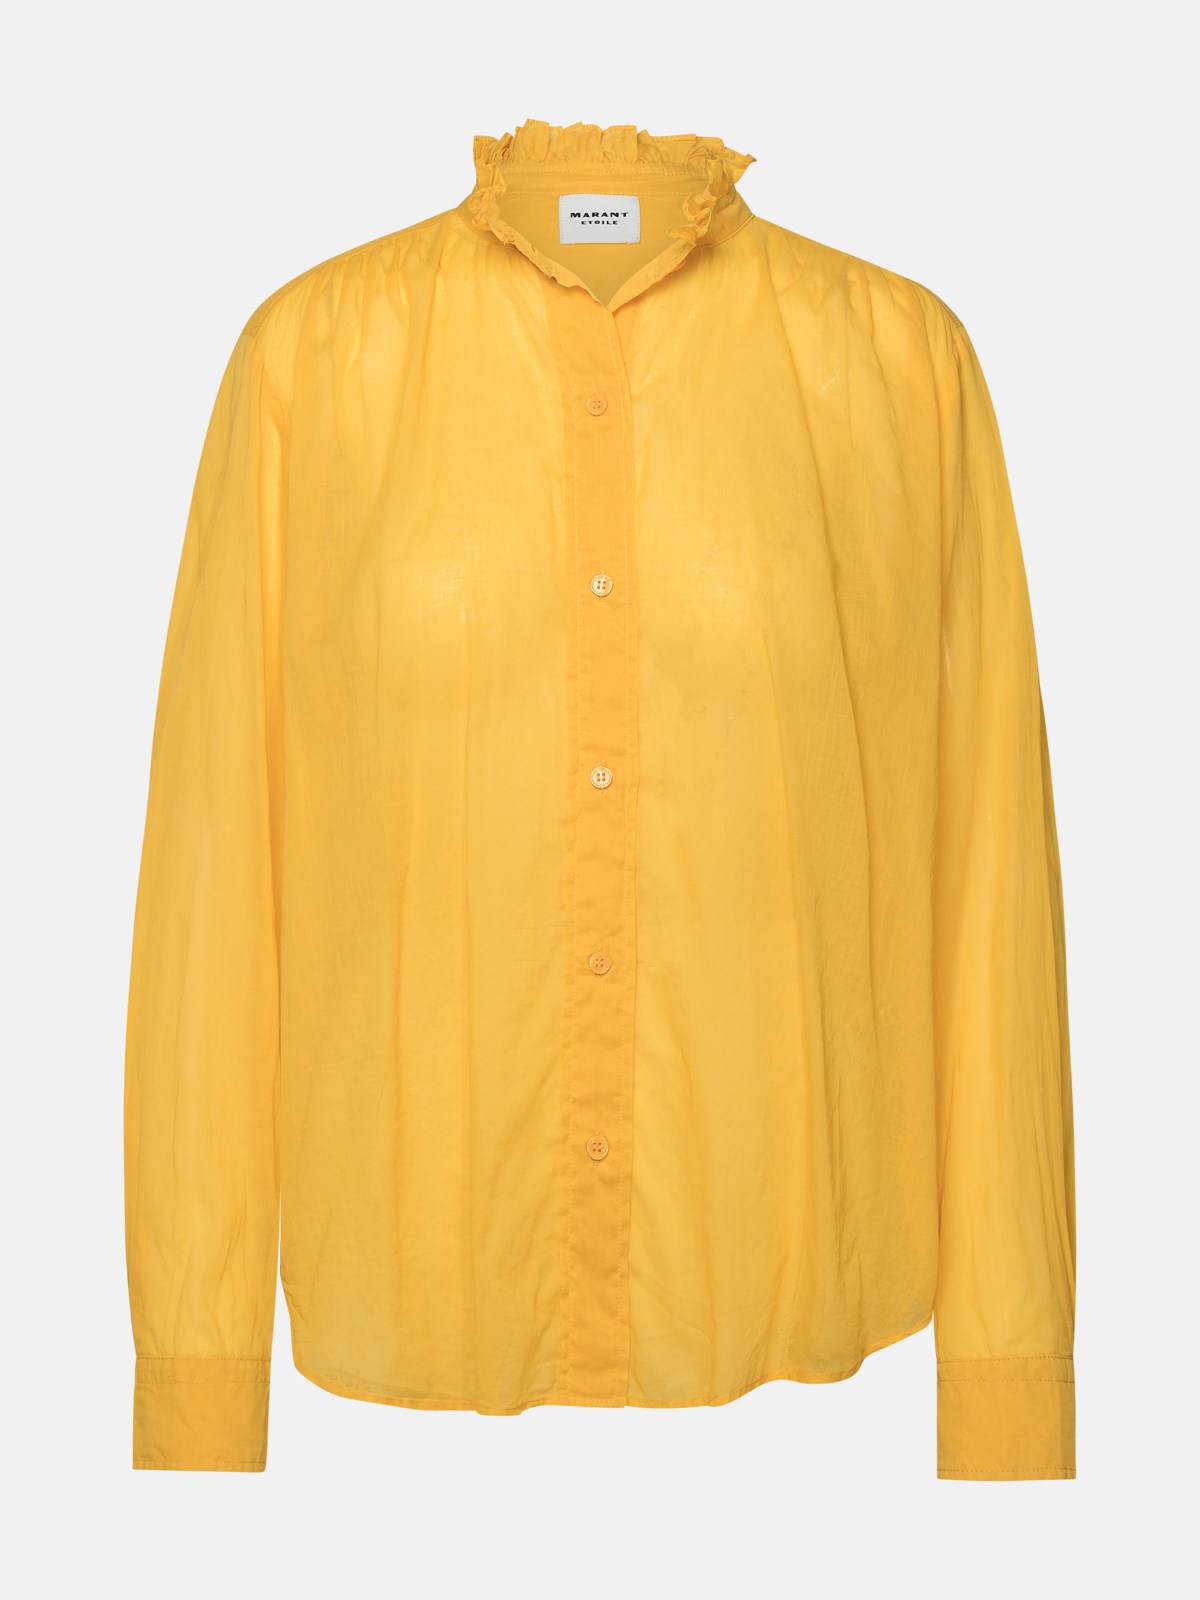 Marant Etoile 'gamble' Yellow Cotton Shirt